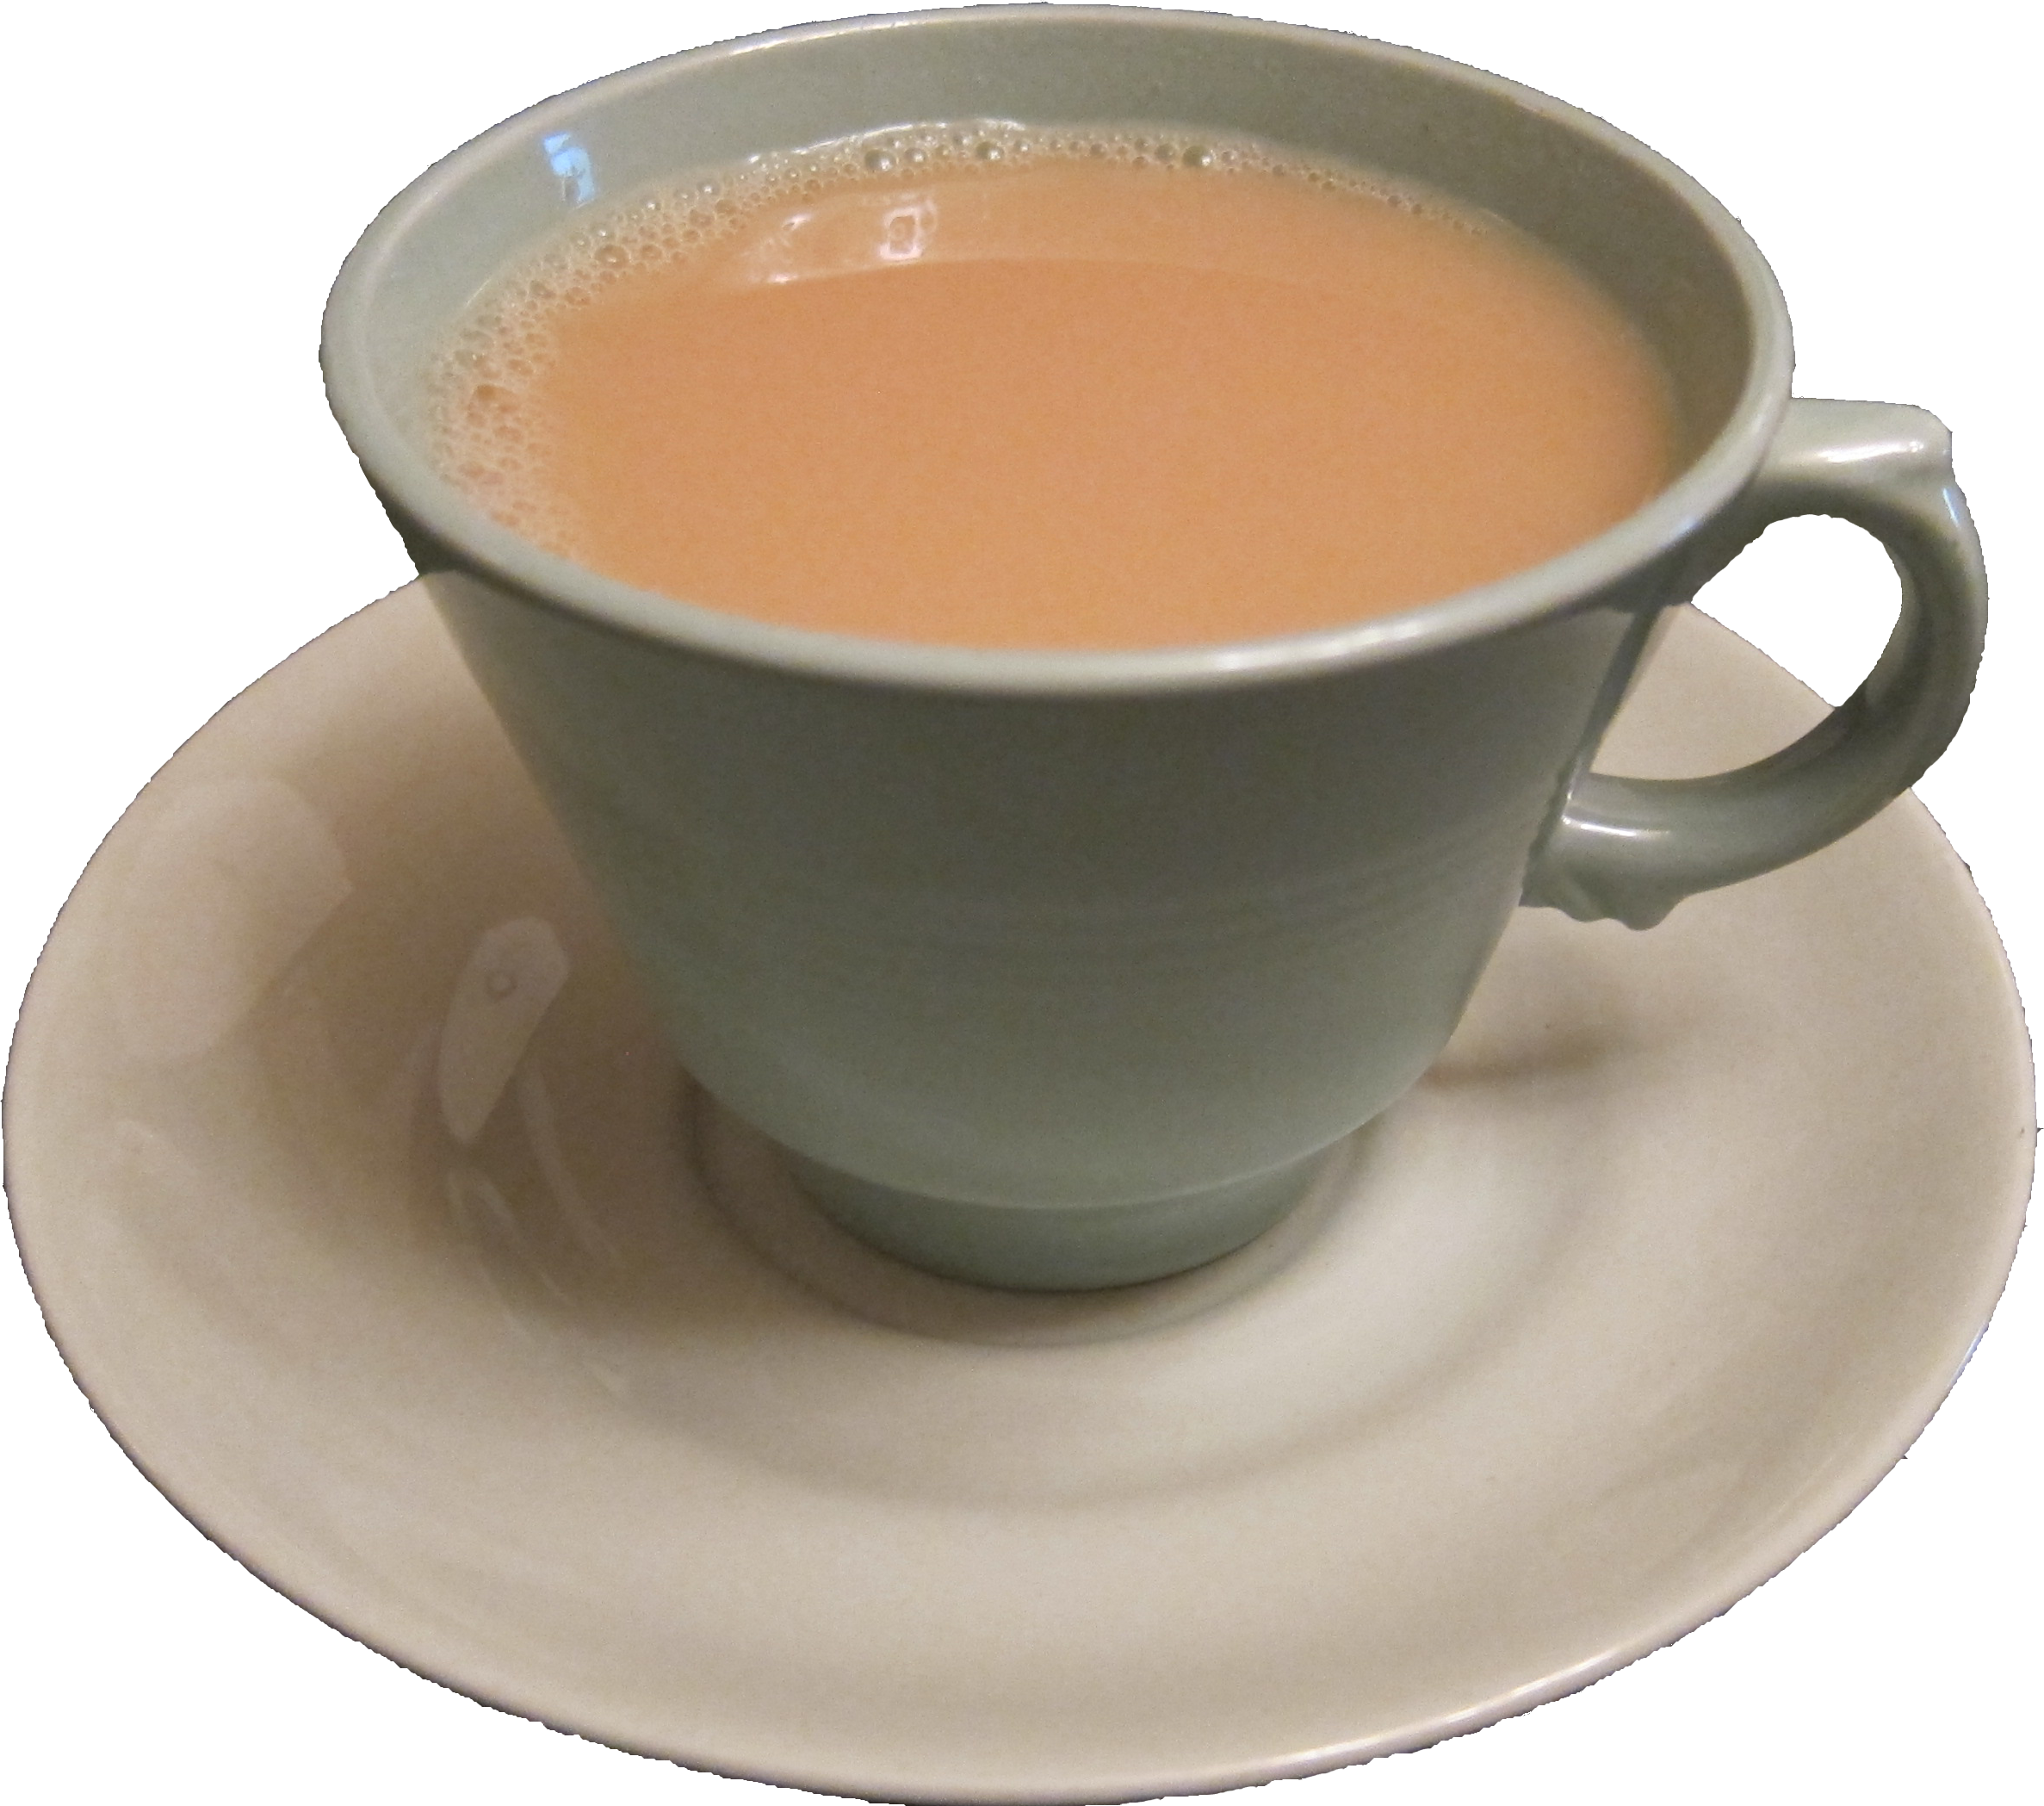 Tea Cup PNG Transparent Image